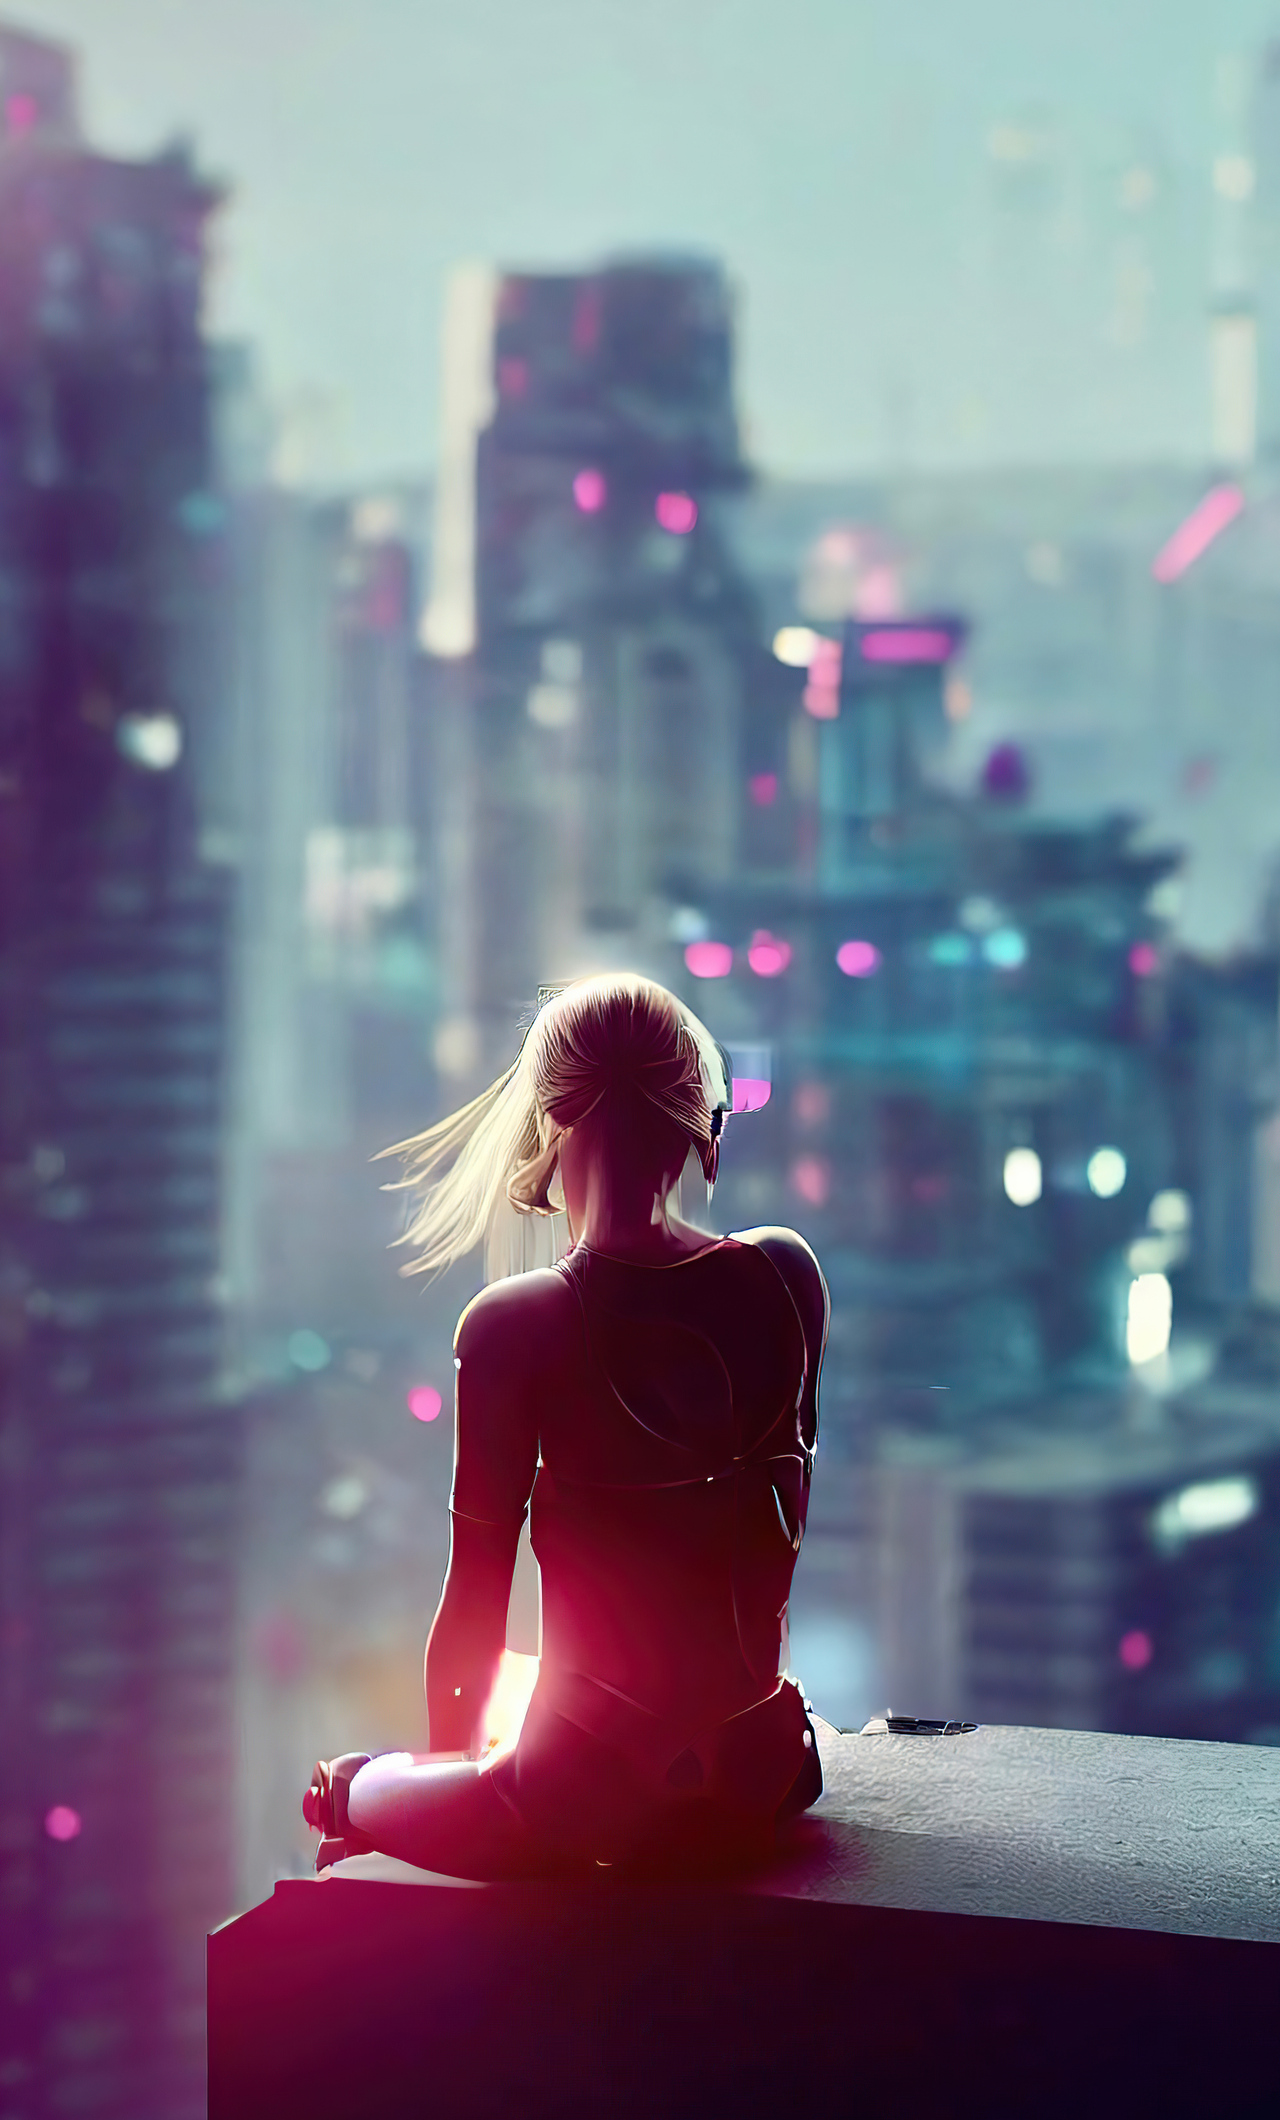 cyberpunk-girl-on-rooftop-ledge-bg.jpg